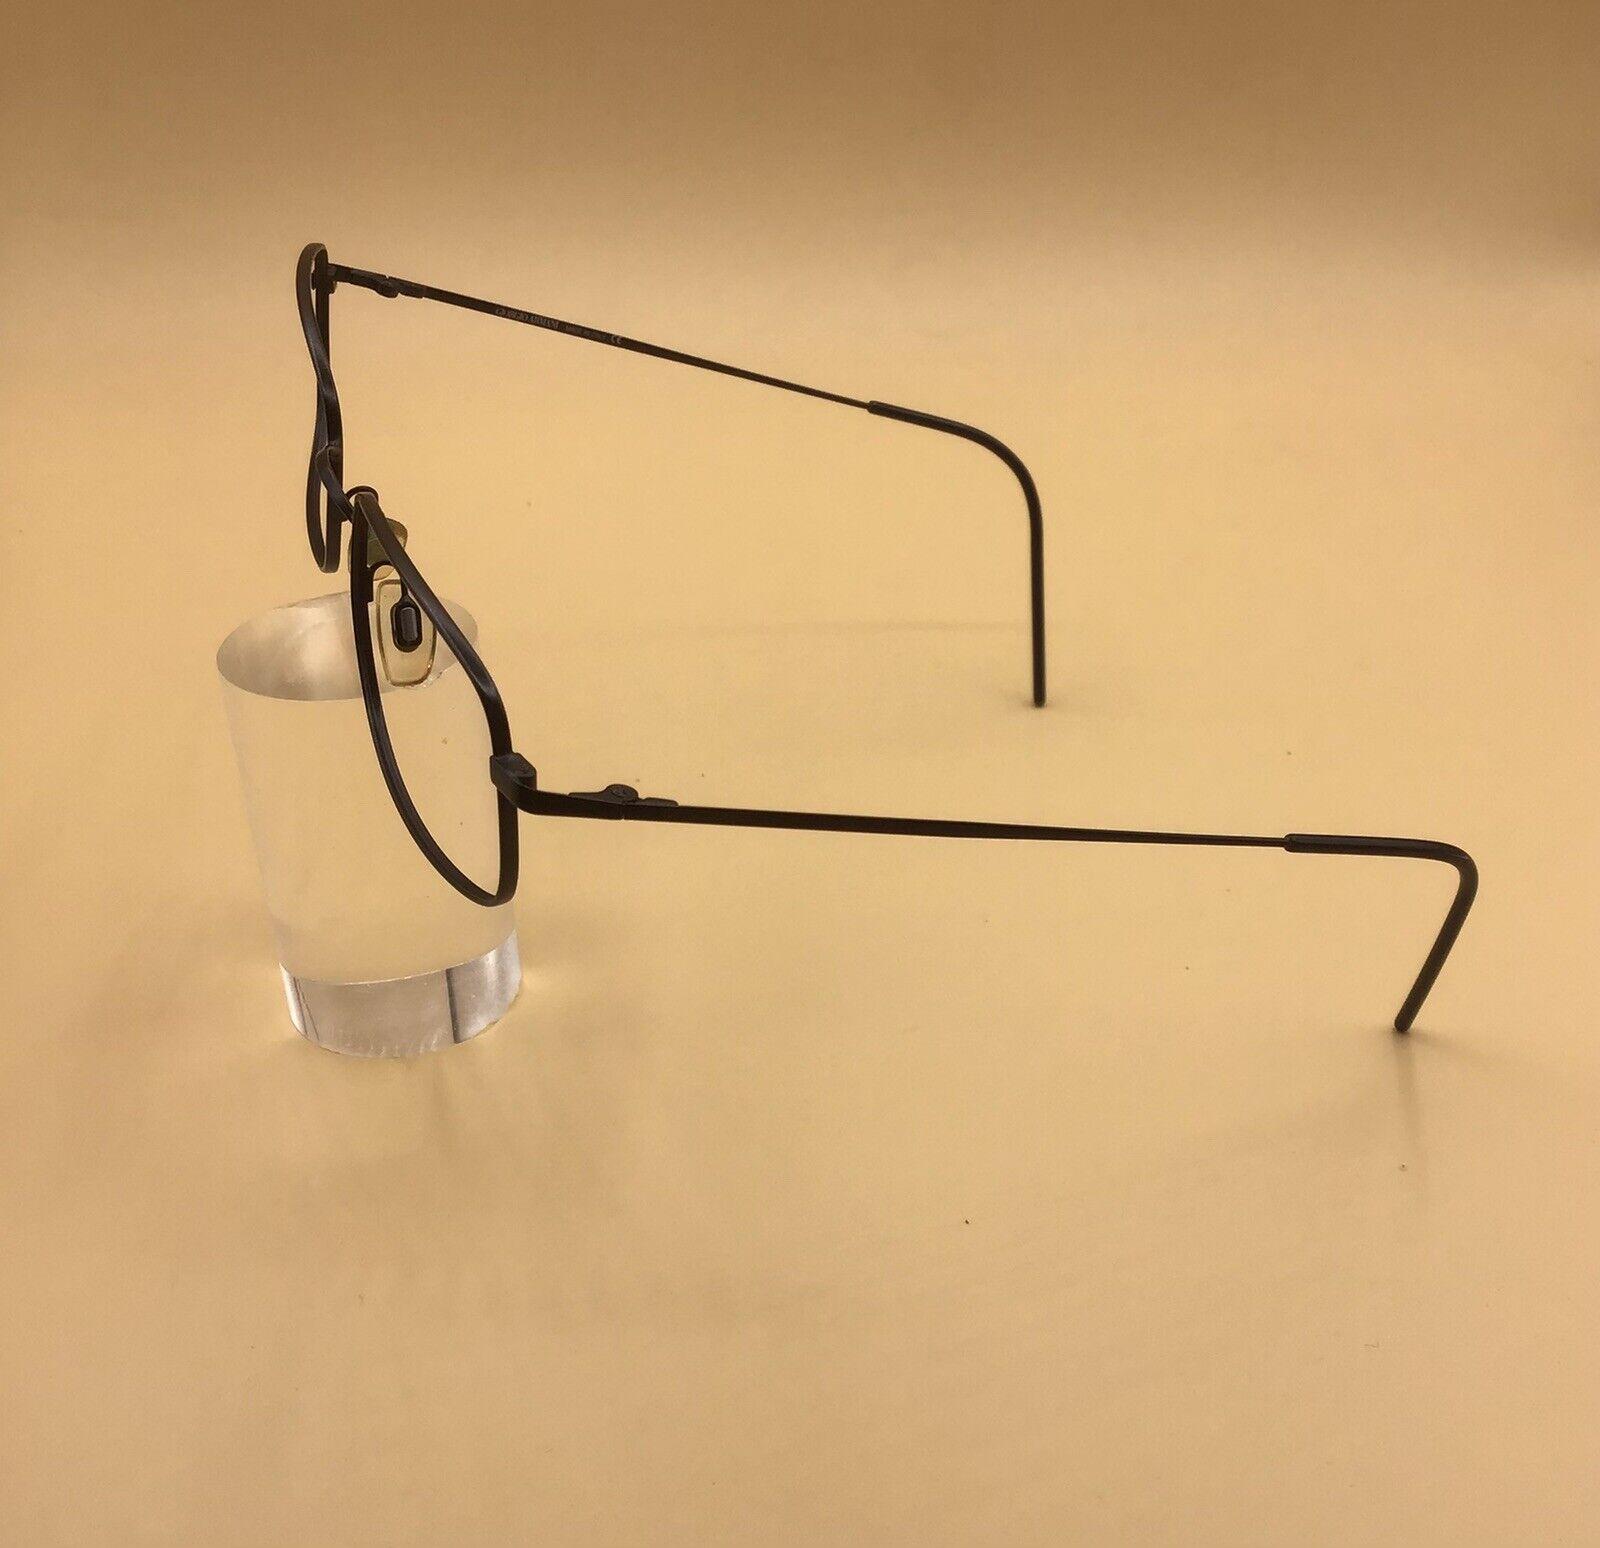 Giorgio Armani Occhiale Vintage Eyewear Frame Brillen Lunettes model 1087 706